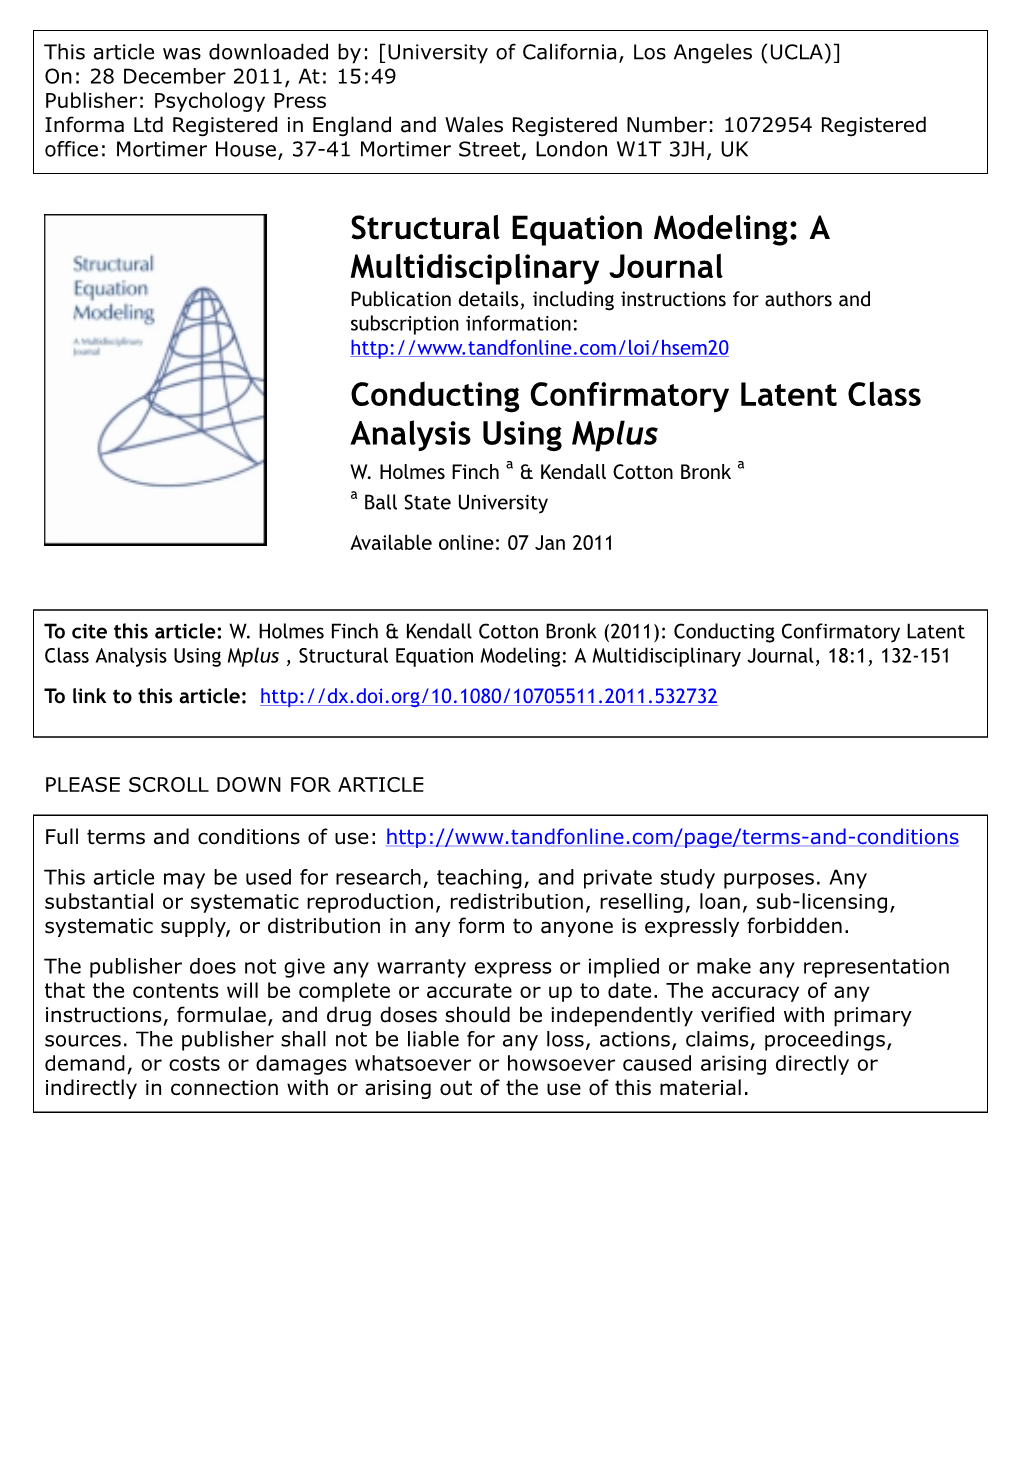 Conducting Confirmatory Latent Class Analysis Using Mplus W